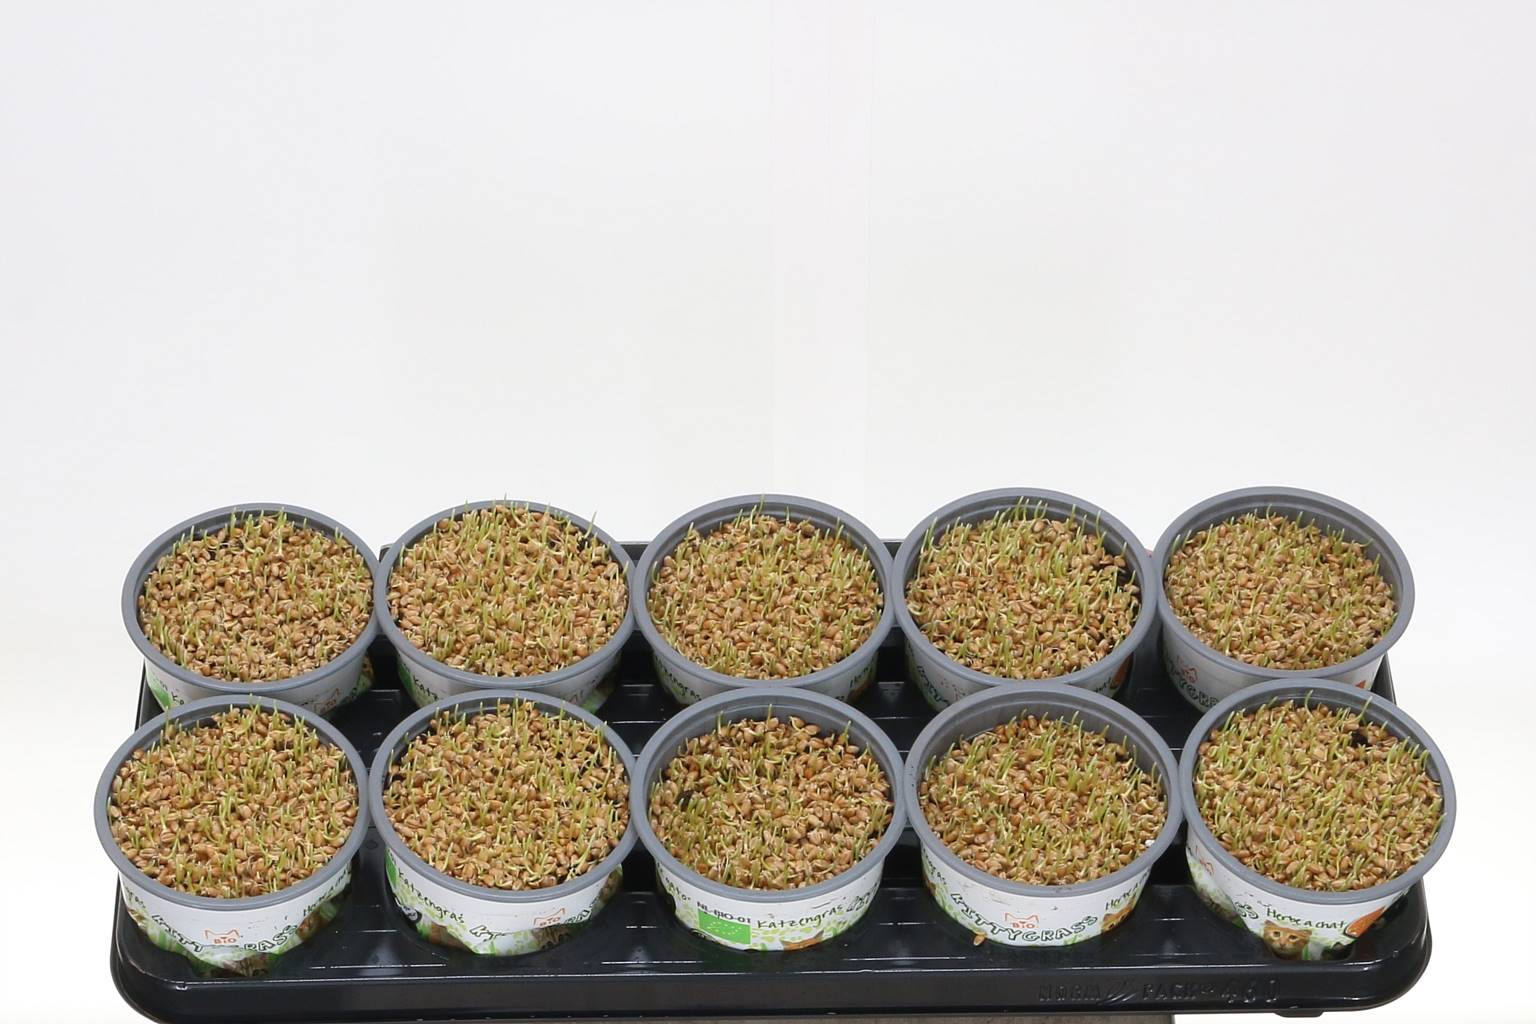 Ячмень (кошачья трава) ( Hordeum (catgrass) ) W 12 см H 10 см